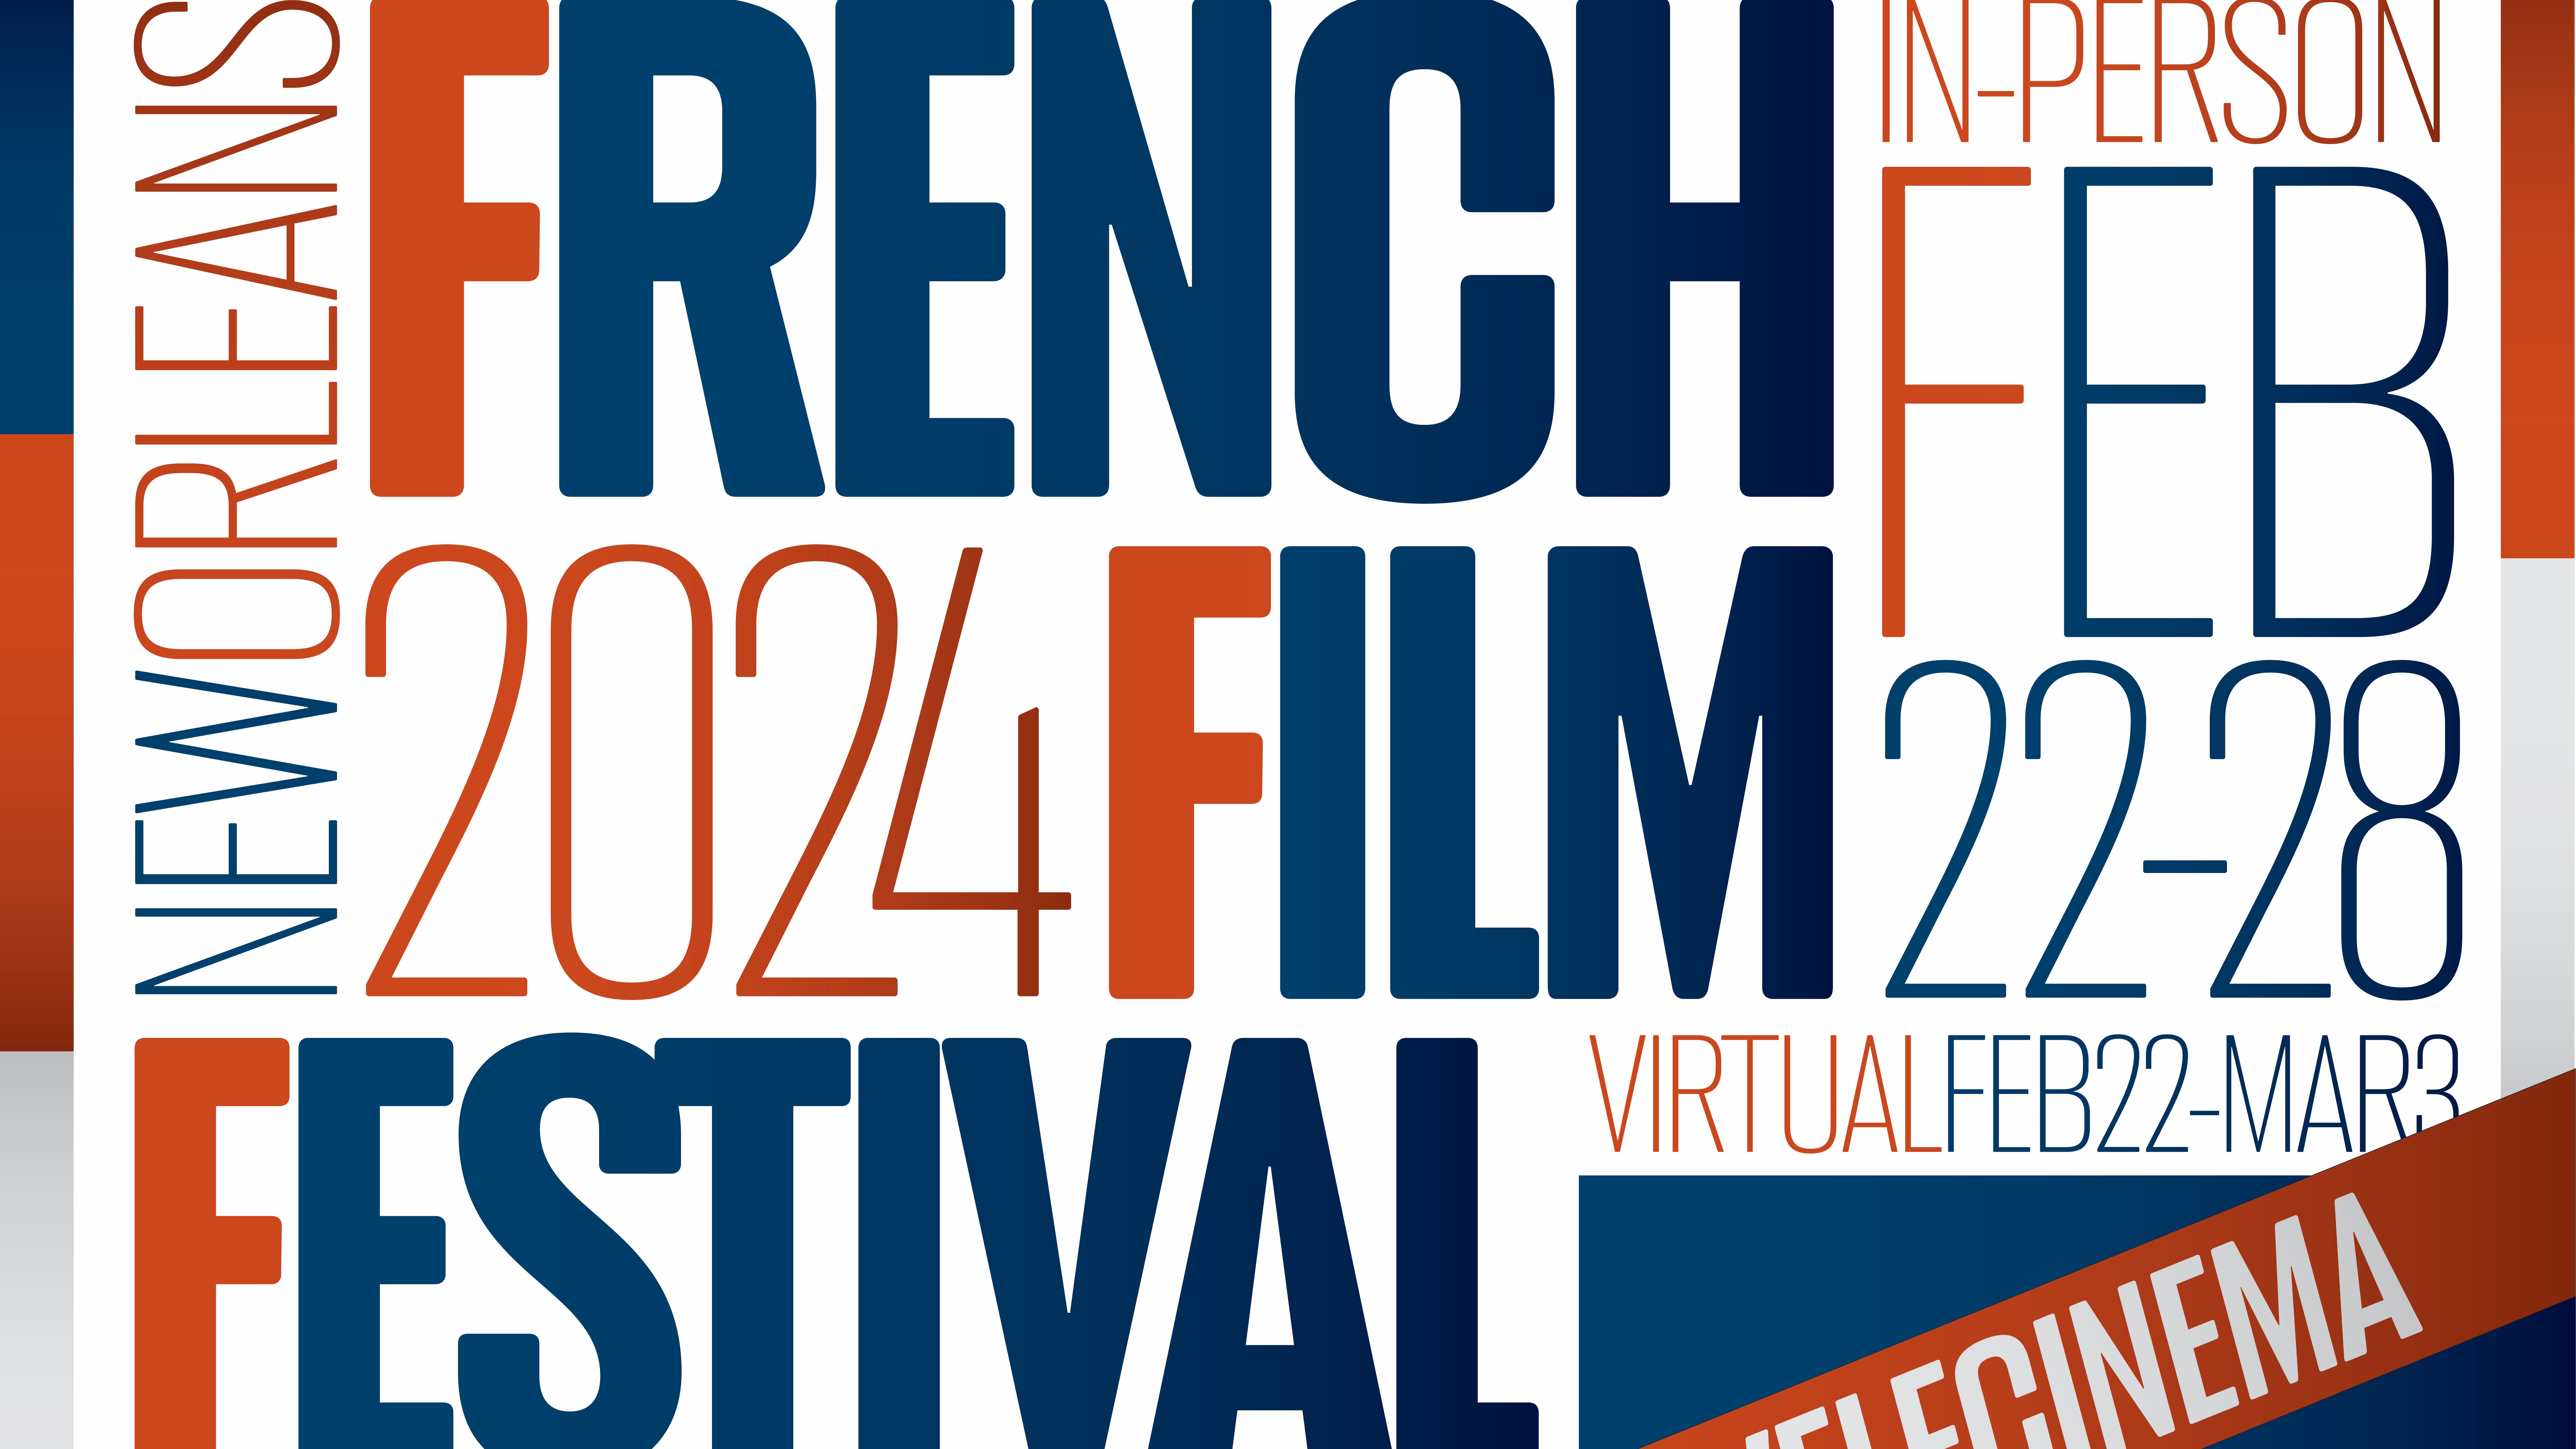 2024 French Film Festival